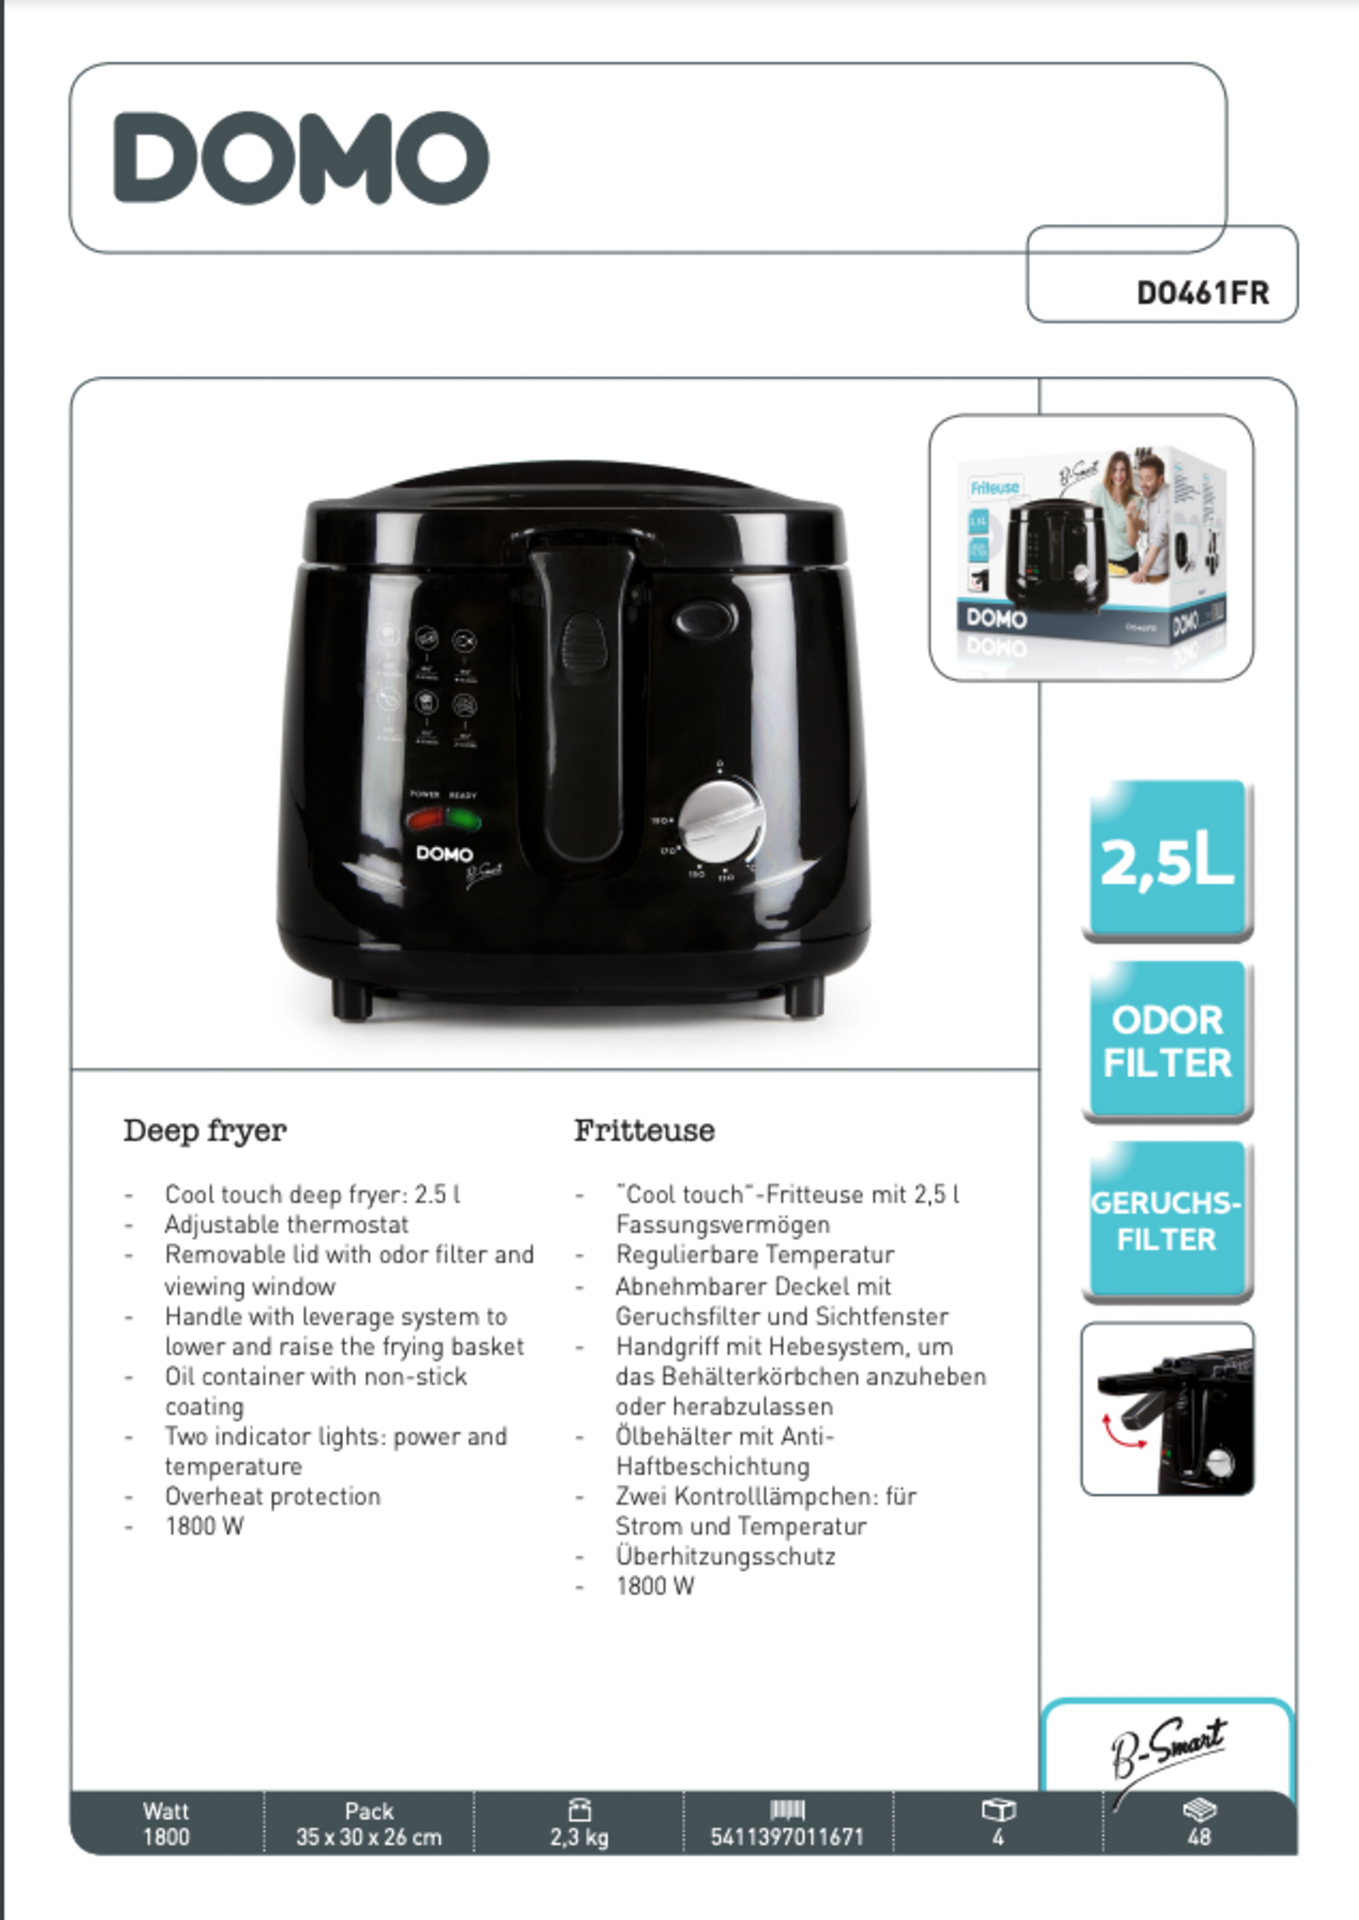 DOMO Deep fryer 2,5L - ABS Black - B Smart RRP £ 65 - Image 4 of 4